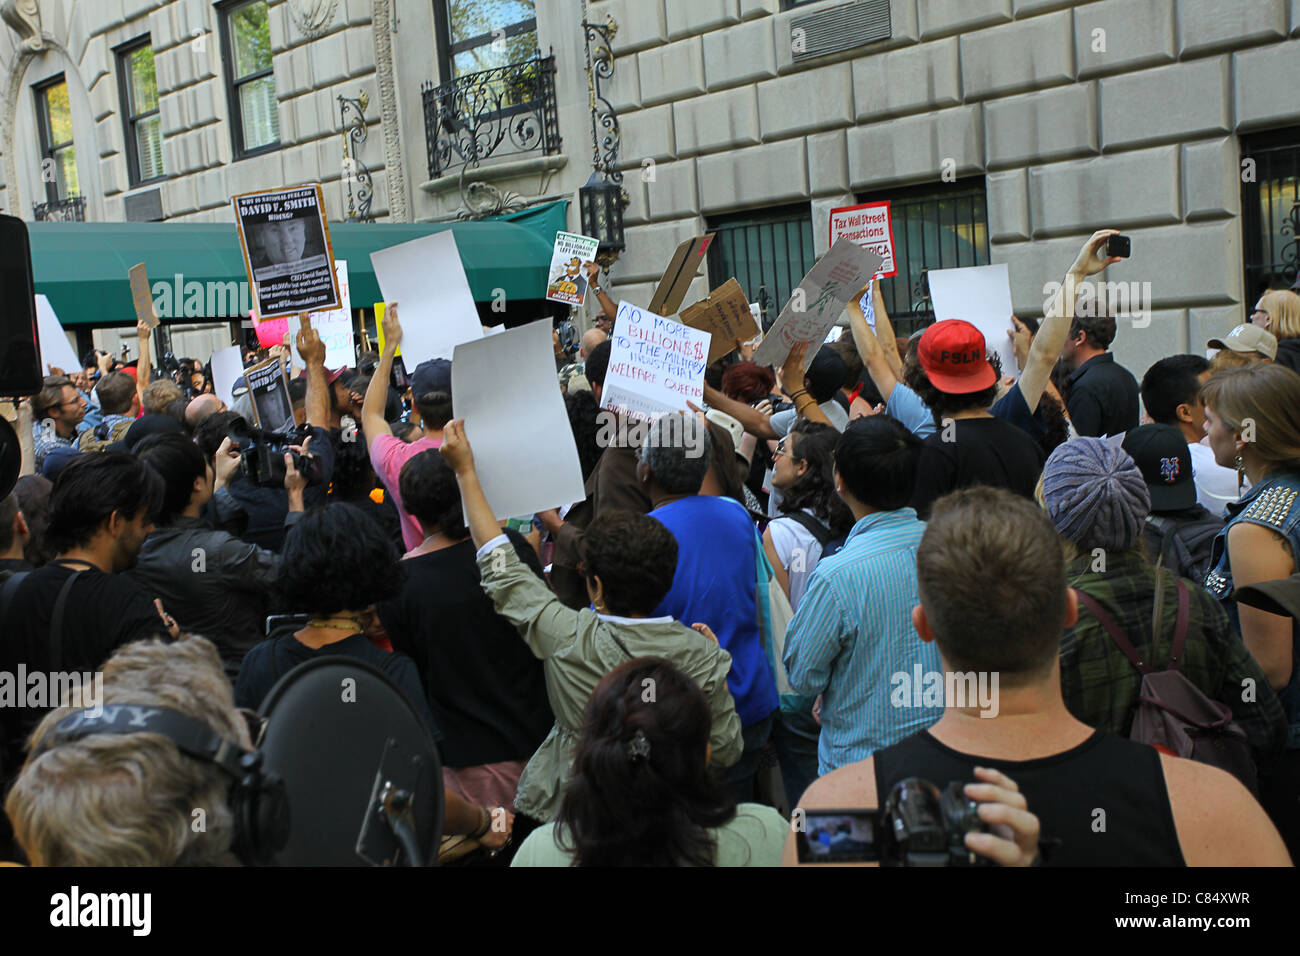 Occupare Wall Street manifestanti, o 99%'ers, raccogliere a 59th Street e Fifth Avenue a New York, prima di dirigervi al UE Foto Stock